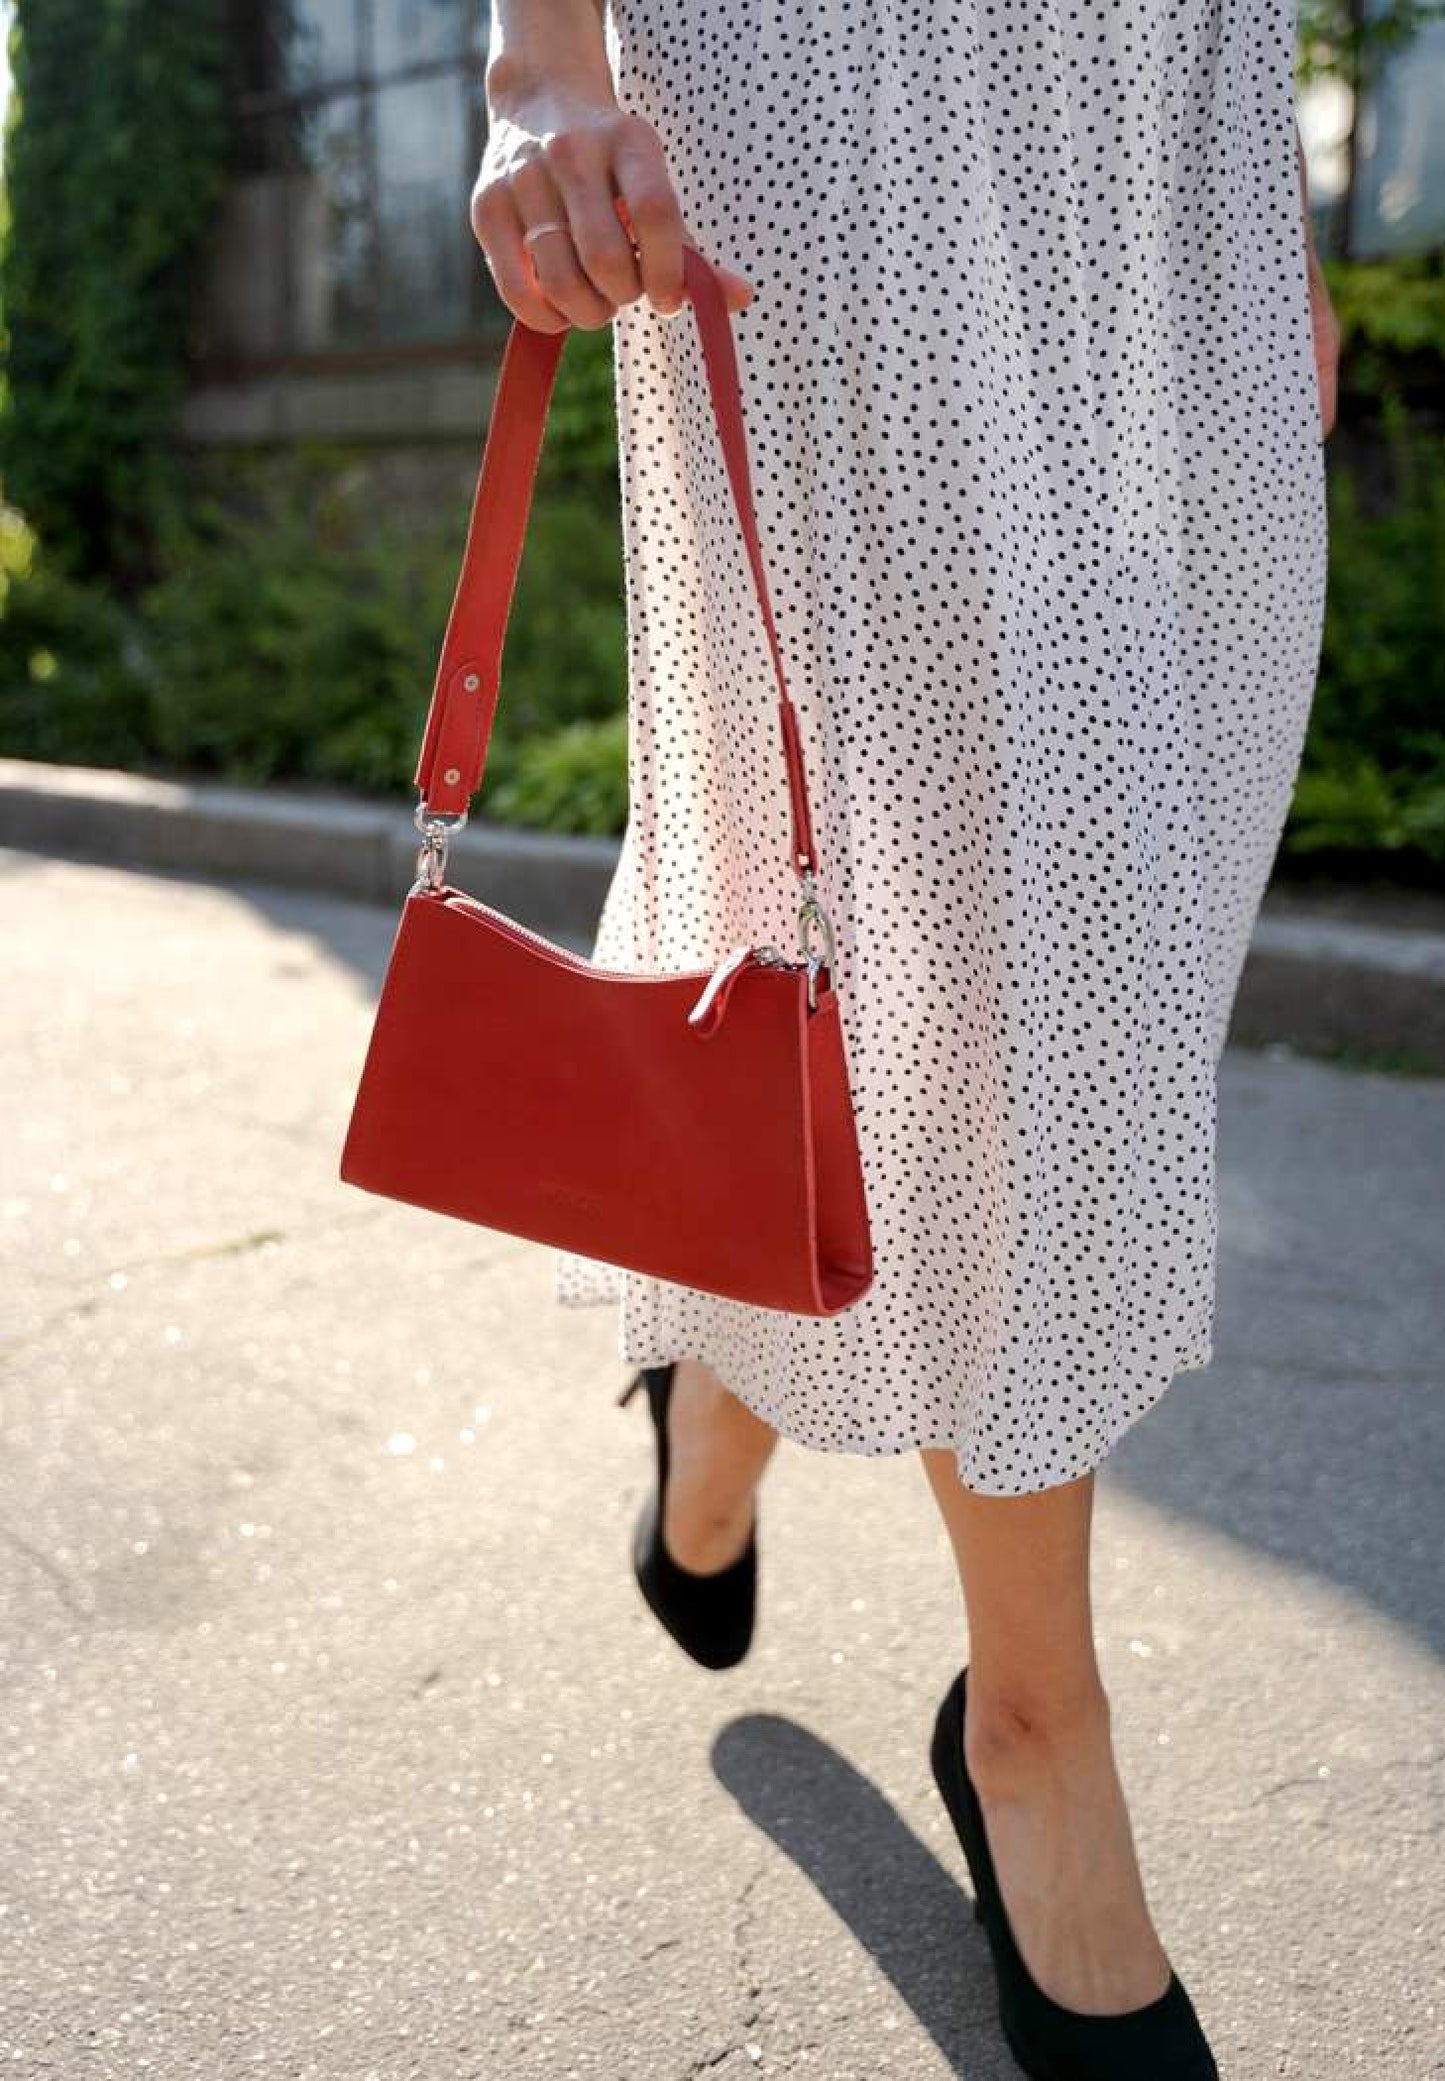 red leather handbag for women